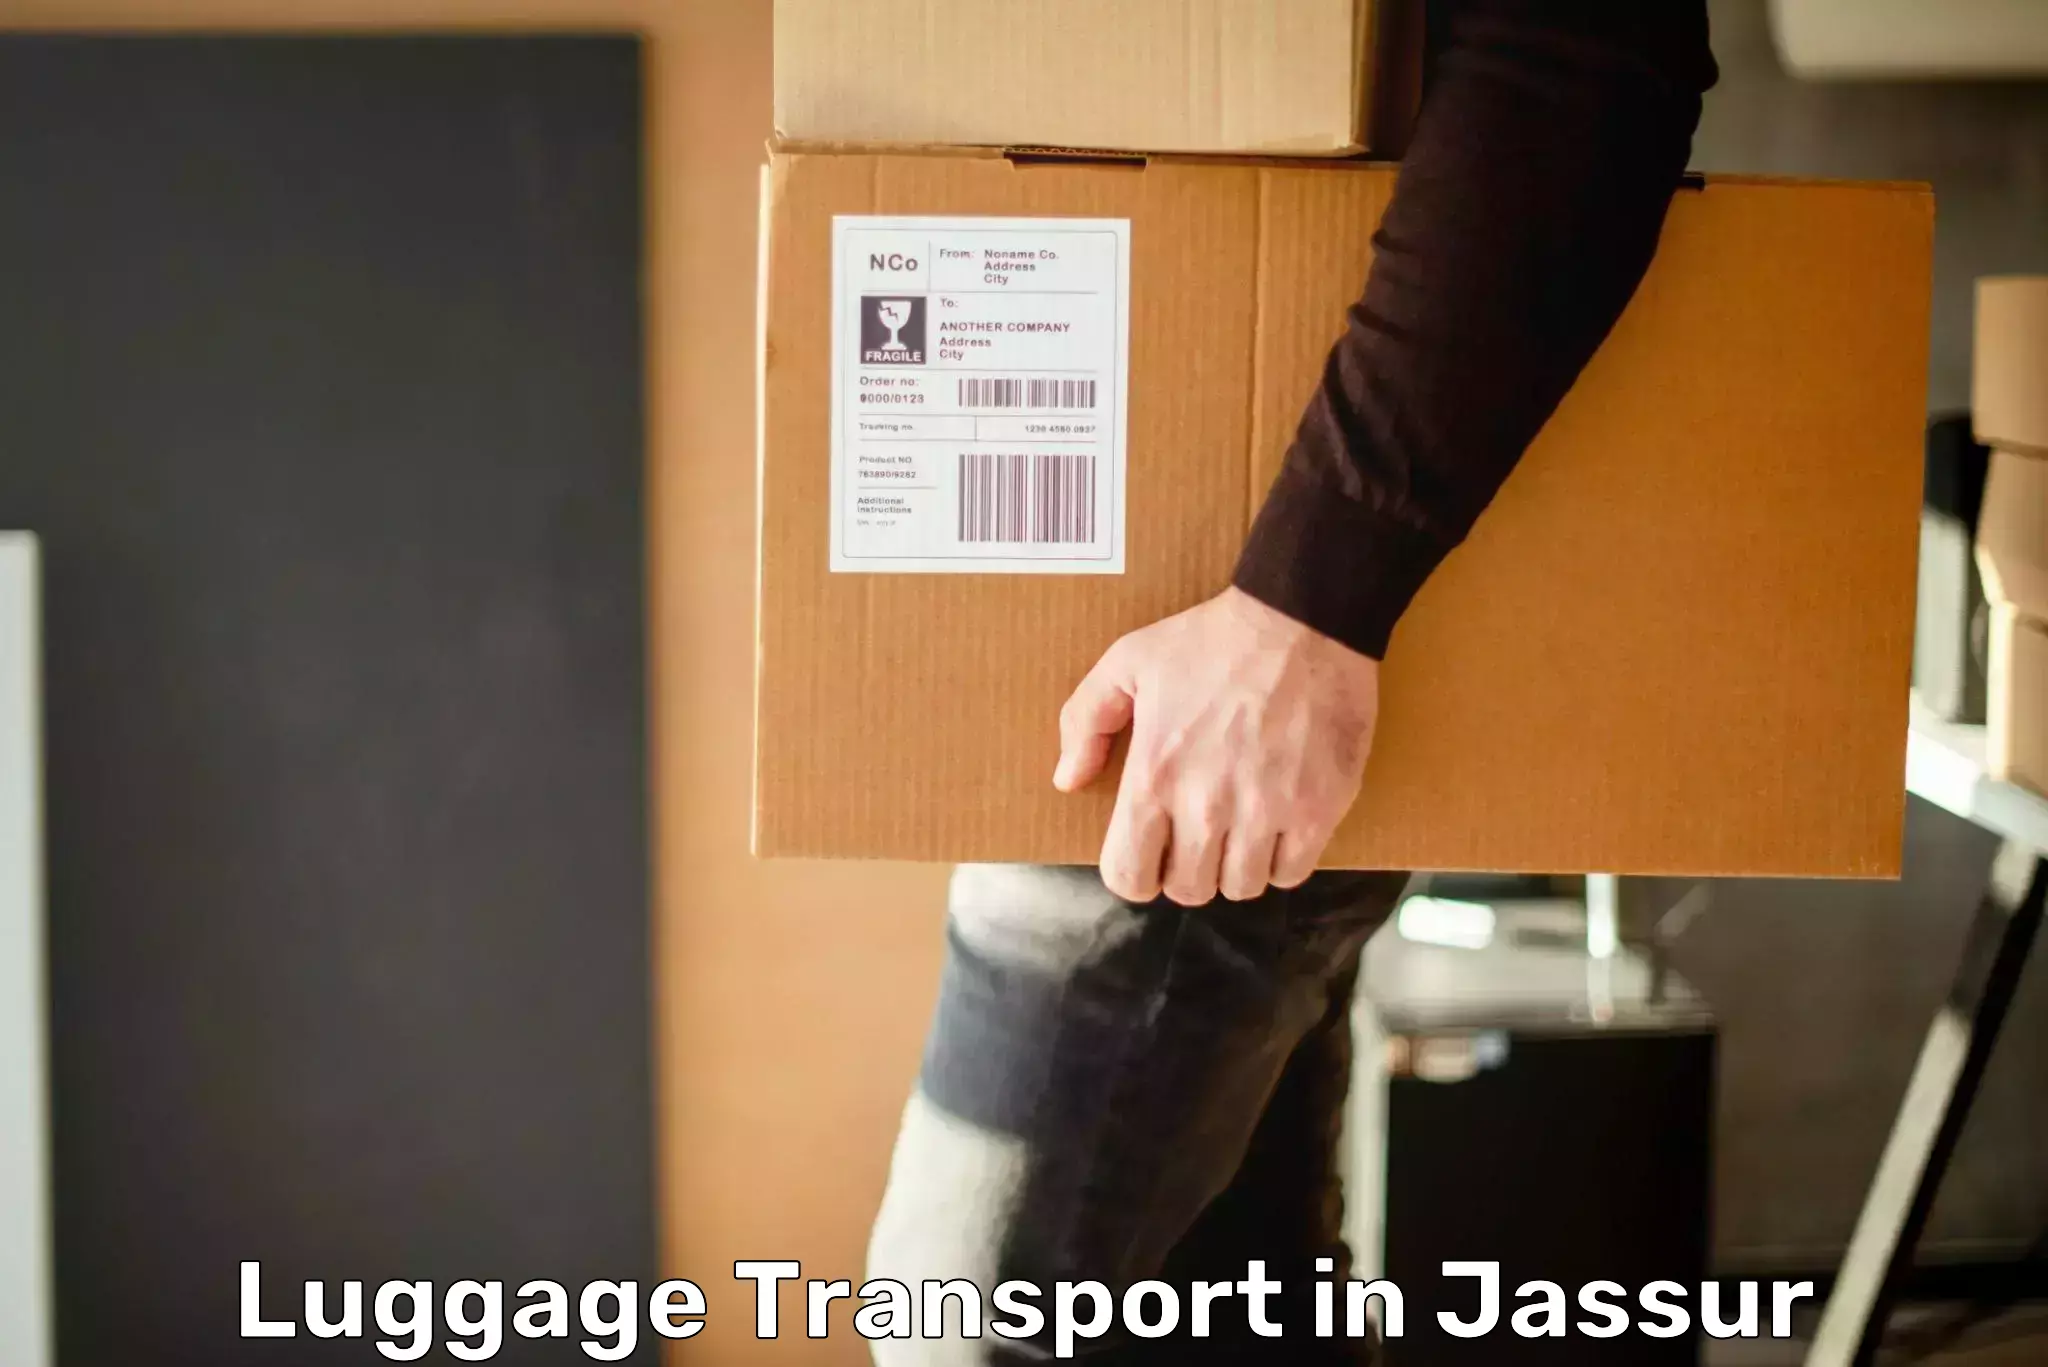 Professional baggage transport in Jassur